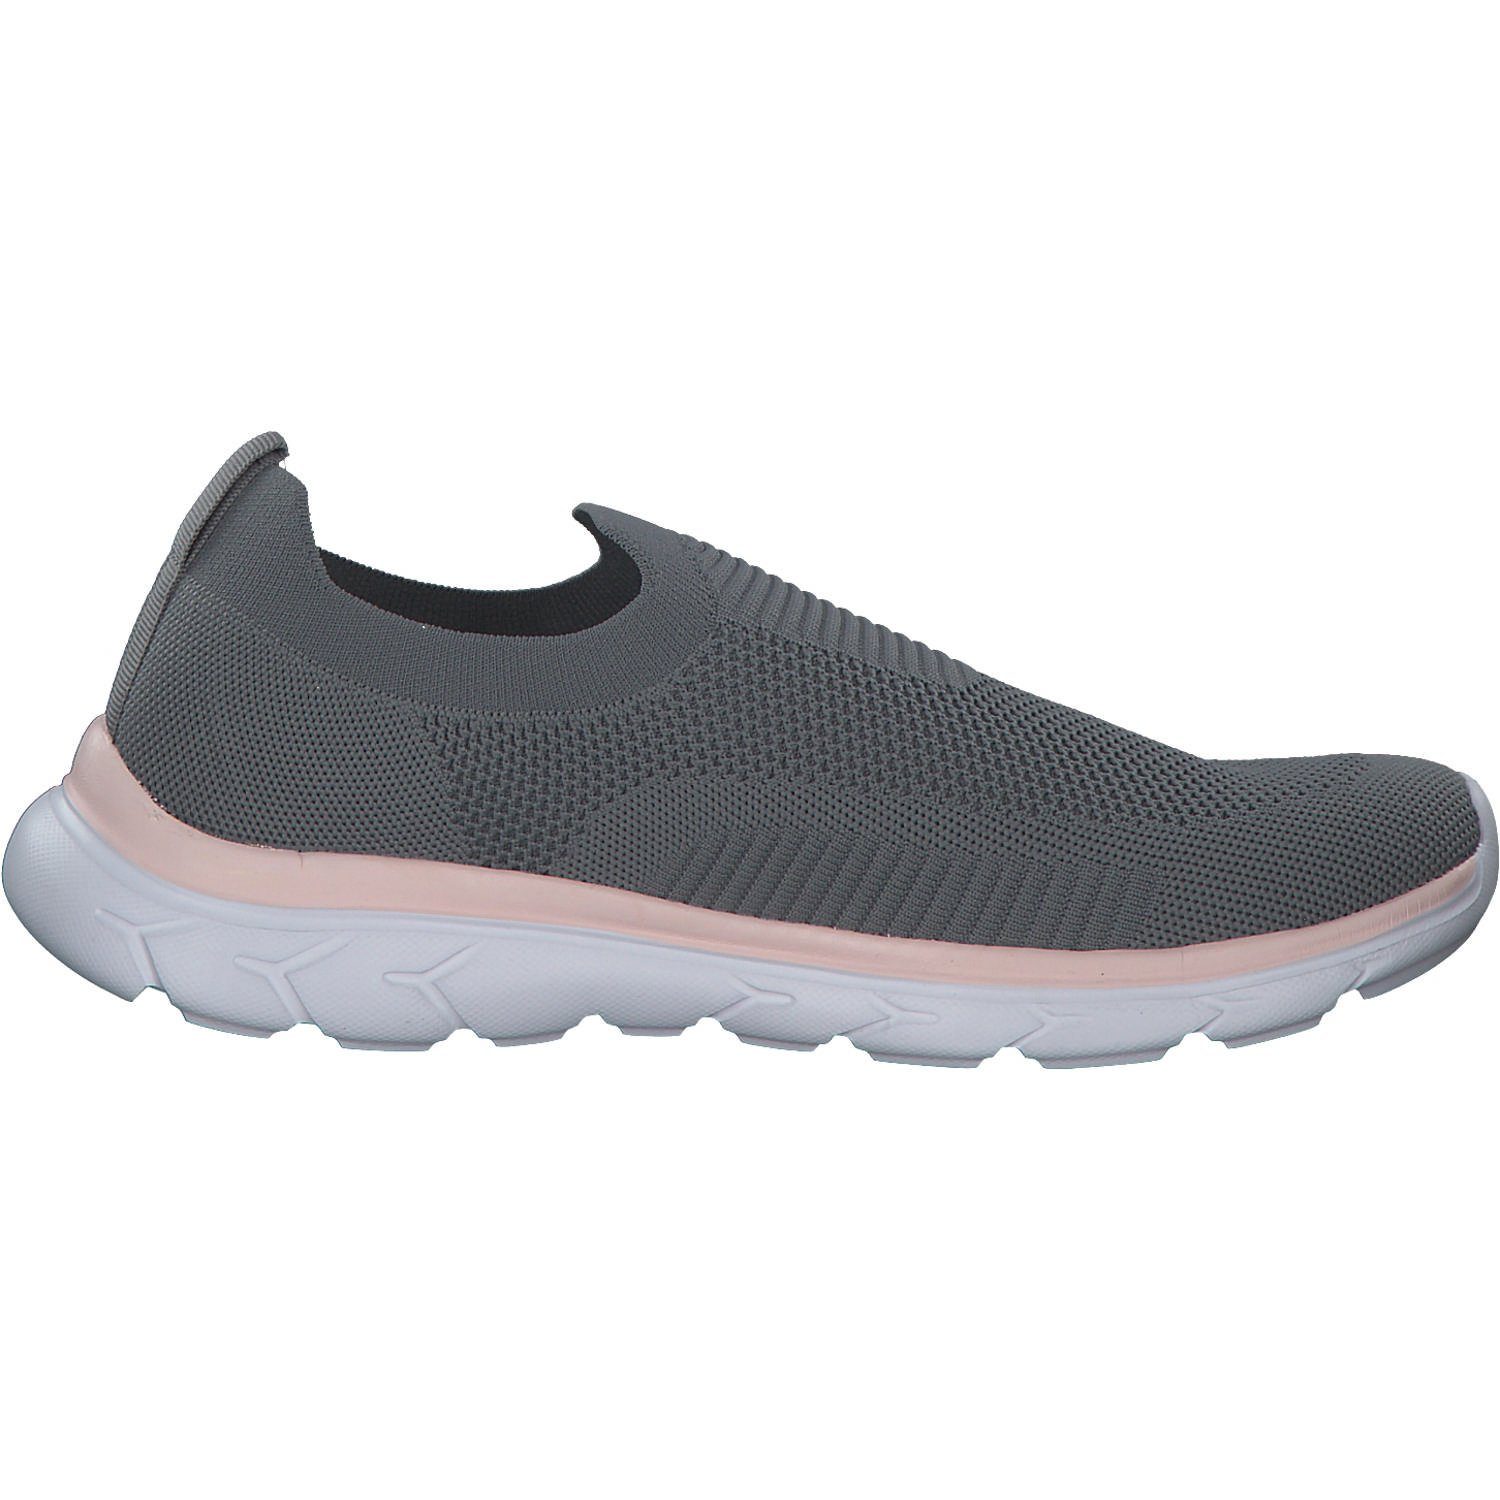 KN-Bristol 39279 KangaROOS pink (12801435) ultimate KangaROOS grey/frost Sneaker Slip-On